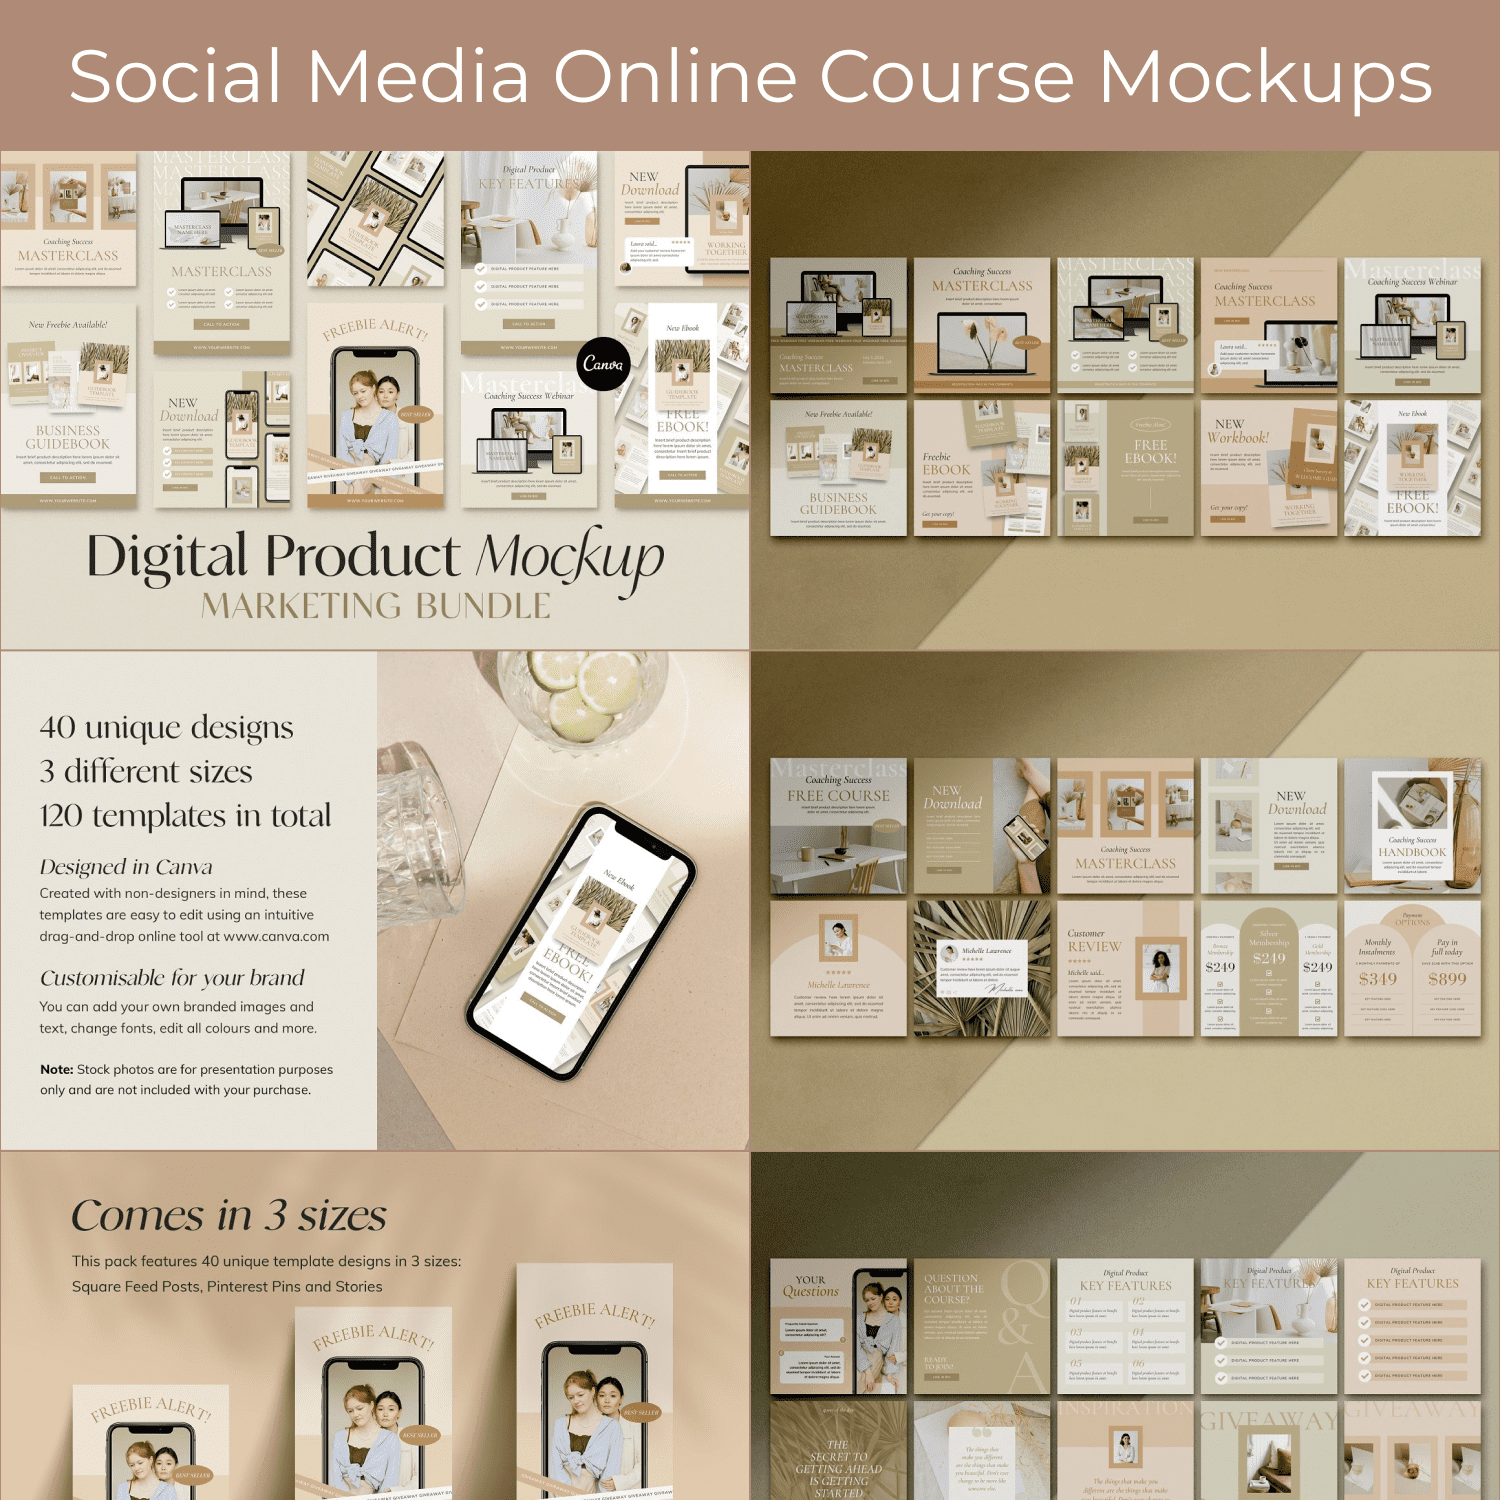 Social Media Online Course Mockups main cover.